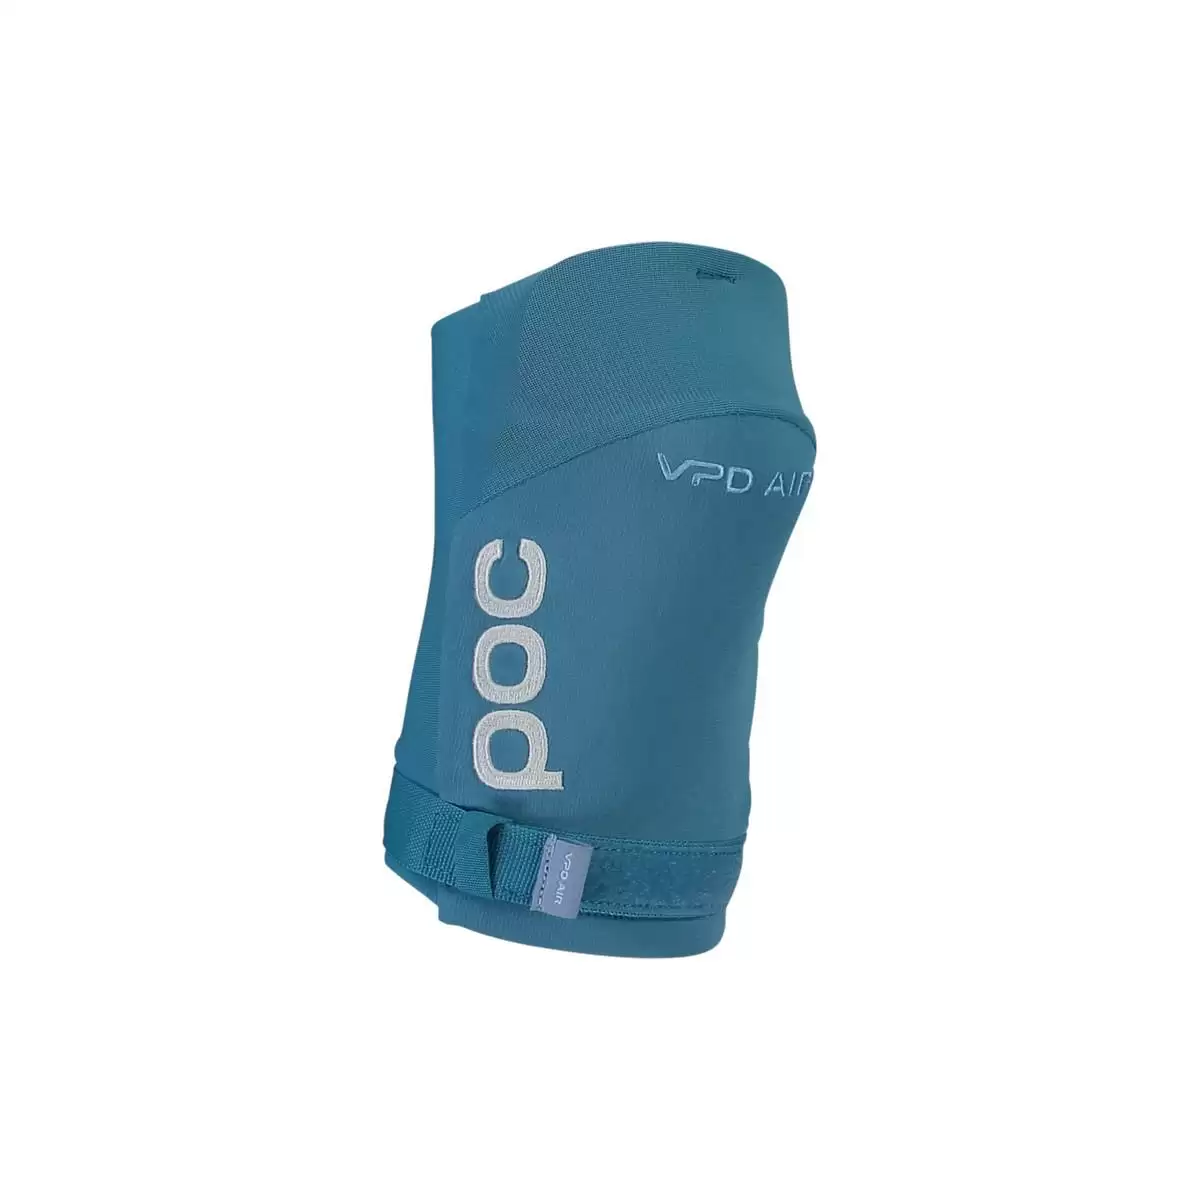 Joint VPD Air Elbow Protectors Basalt Blue Size M - image